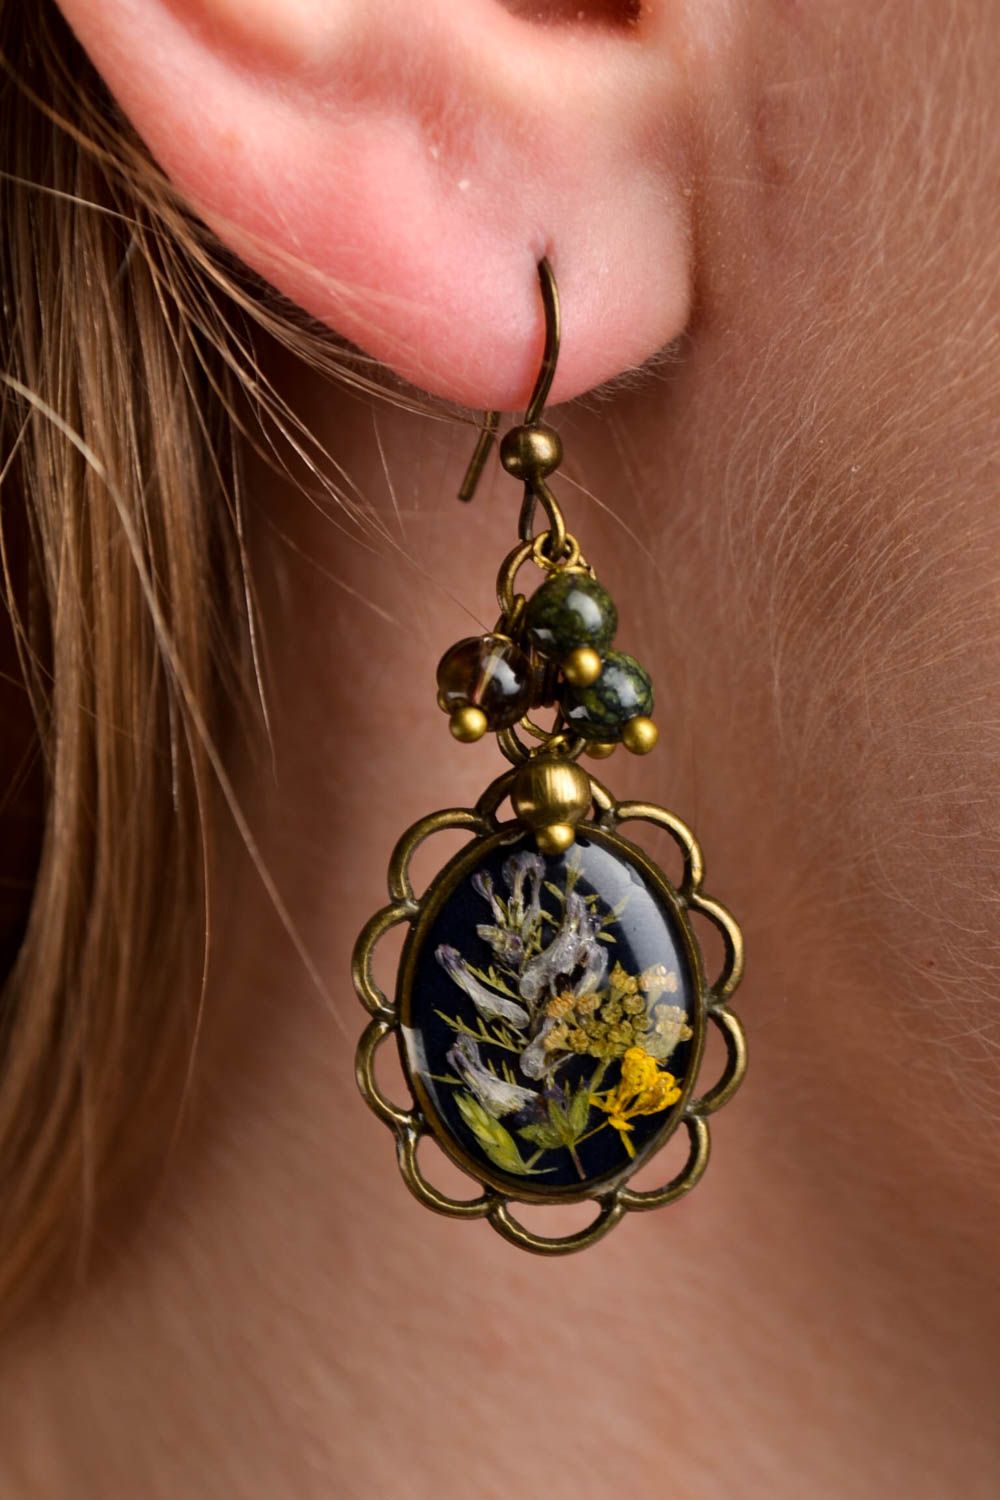 Handmade earrings with charms unusual beautiful earrings stylish jewelry photo 1